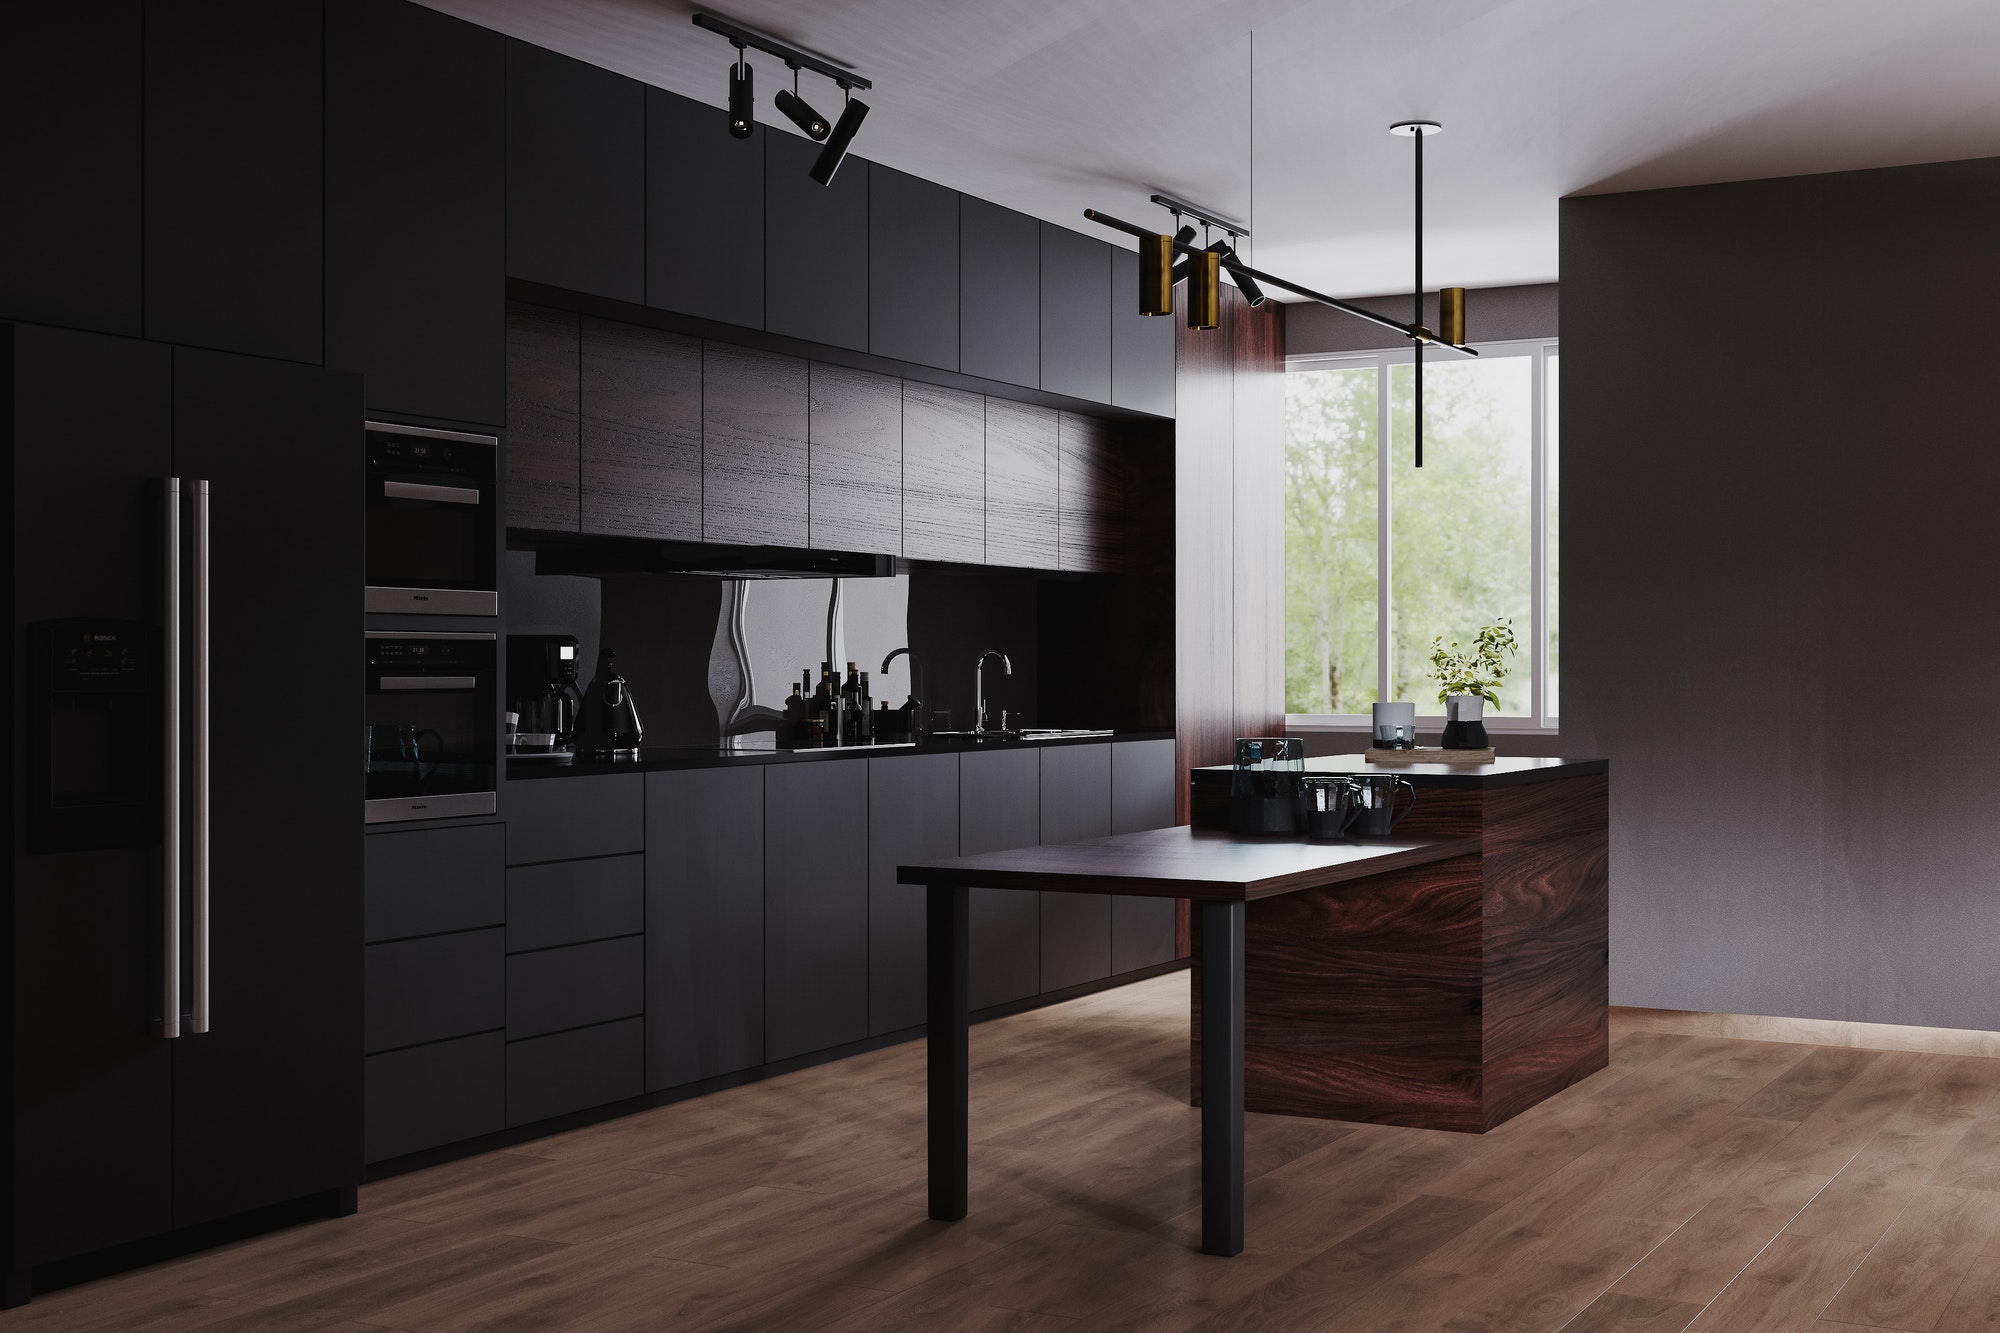 Modern dark kitchen and dinning room interior with furniture and kitchenware